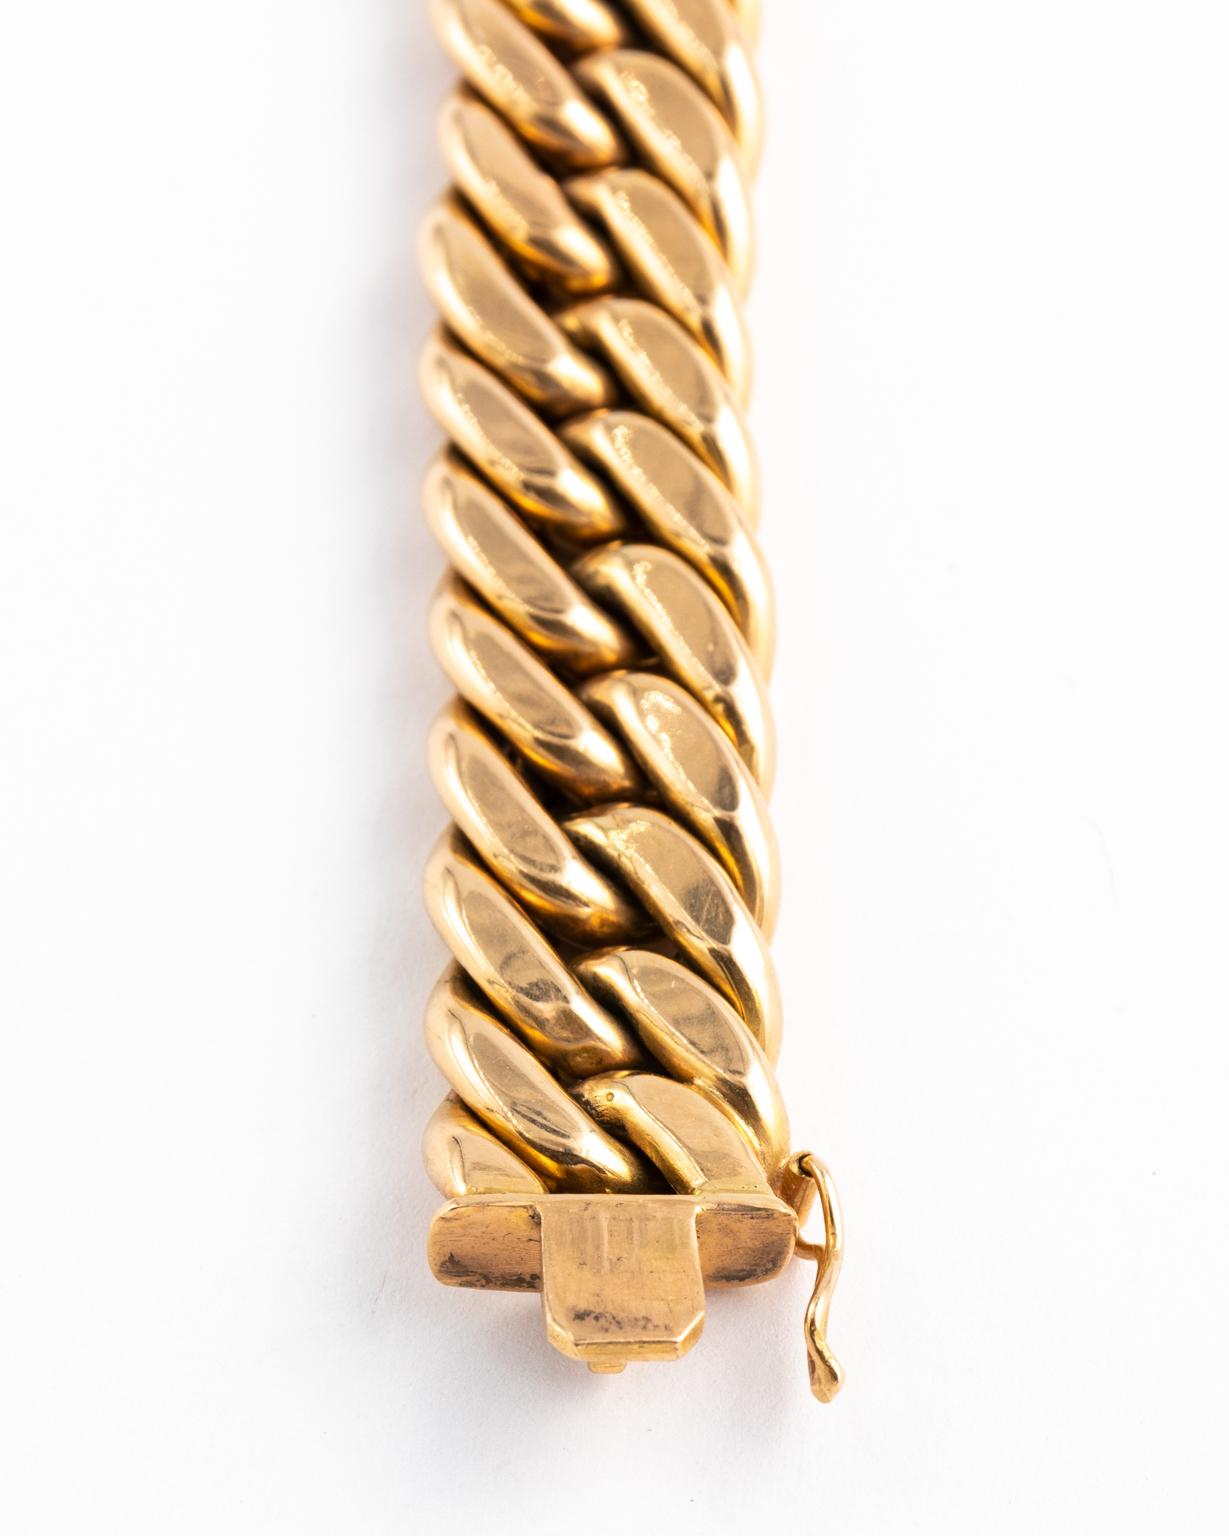 Circa mid 20th century vintage curb link 18 karat gold bracelet, marked 